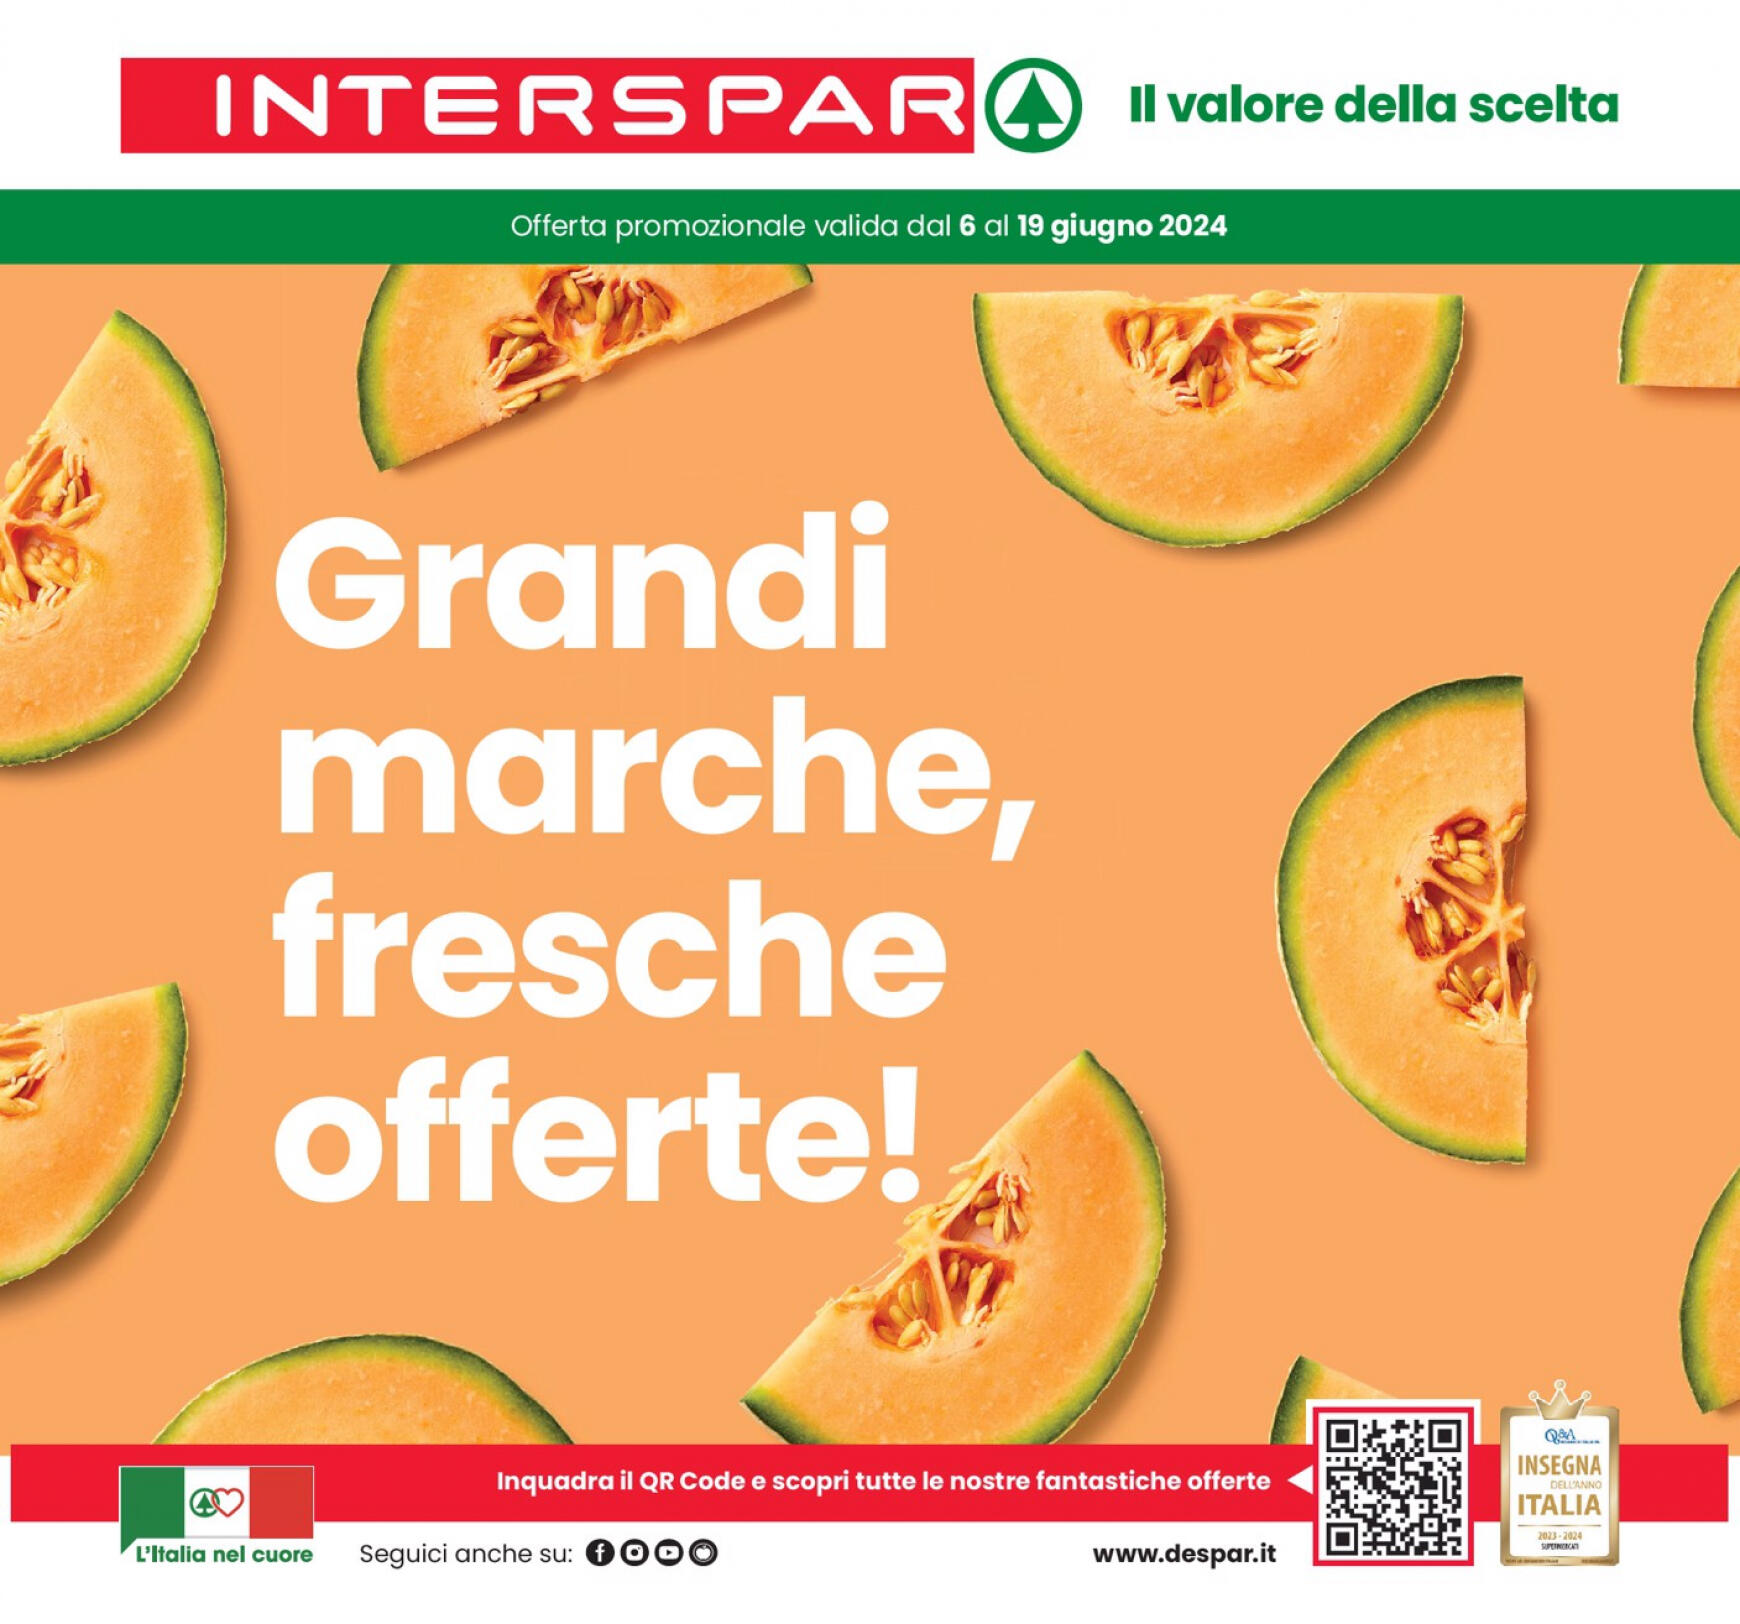 interspar - Nuovo volantino INTERSPAR - Grandi marche, fresche offerte! 06.06. - 19.06. - page: 1